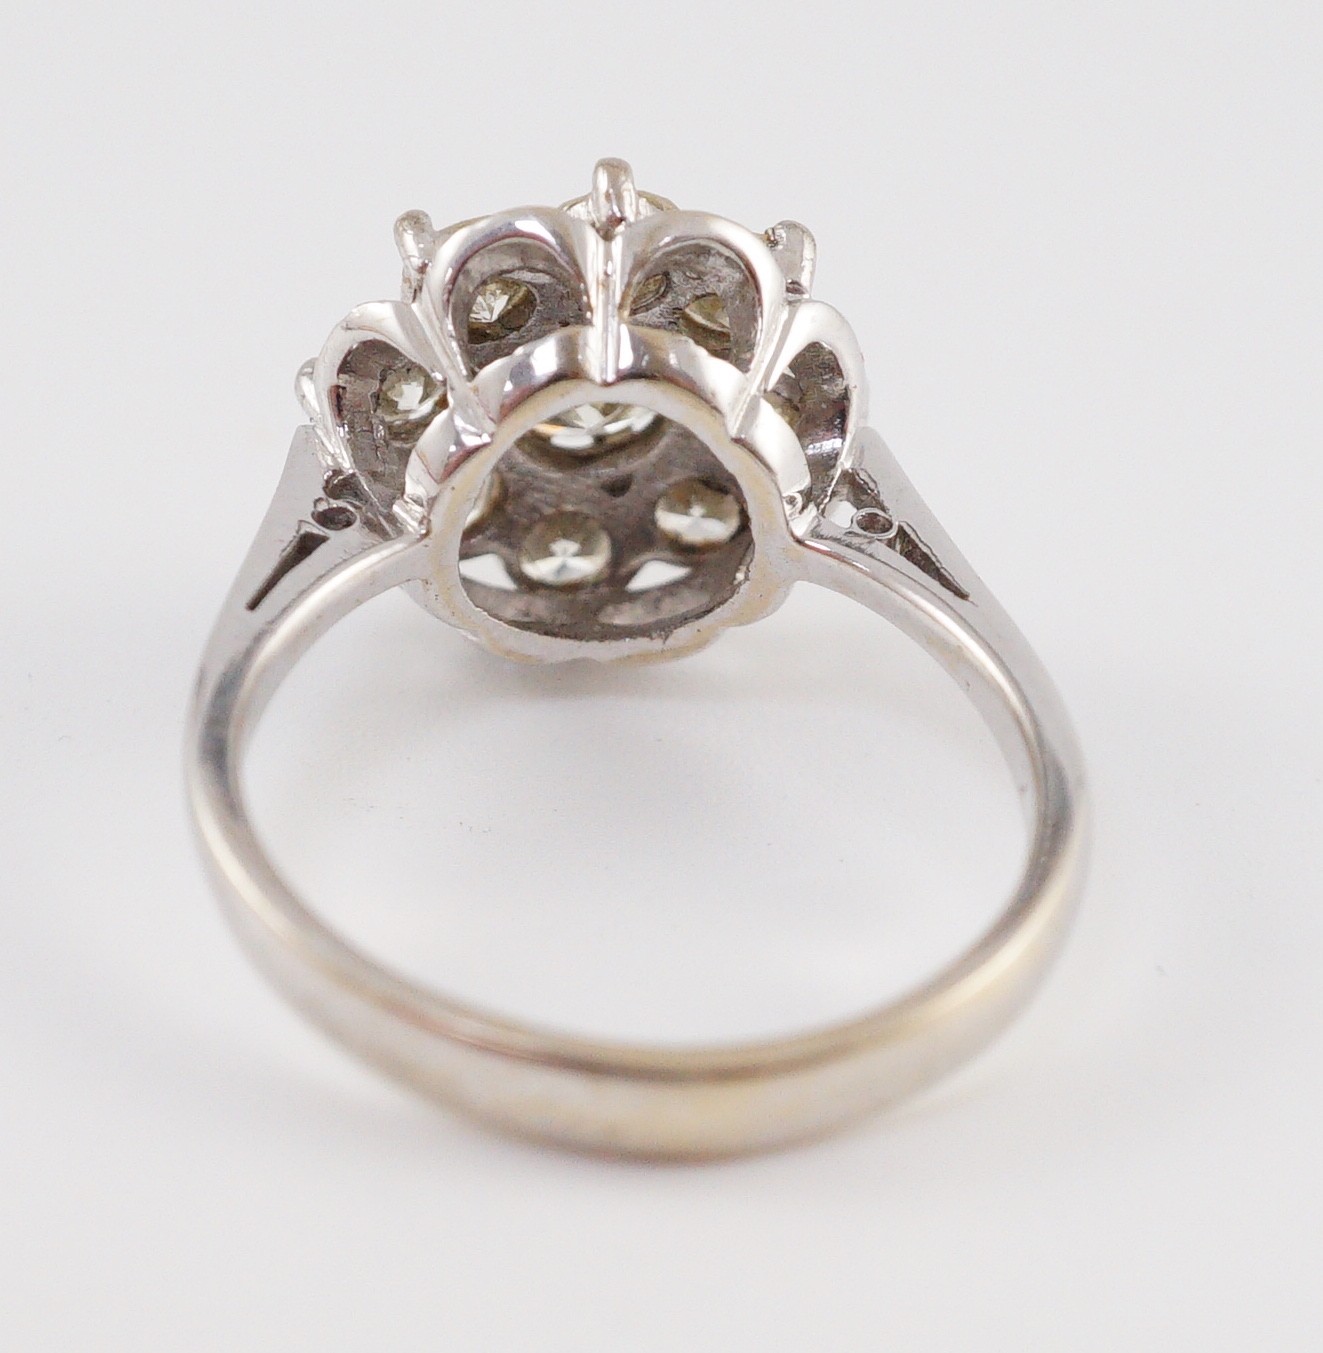 A modern 18ct white gold and nine stone diamond illusion set circular cluster ring